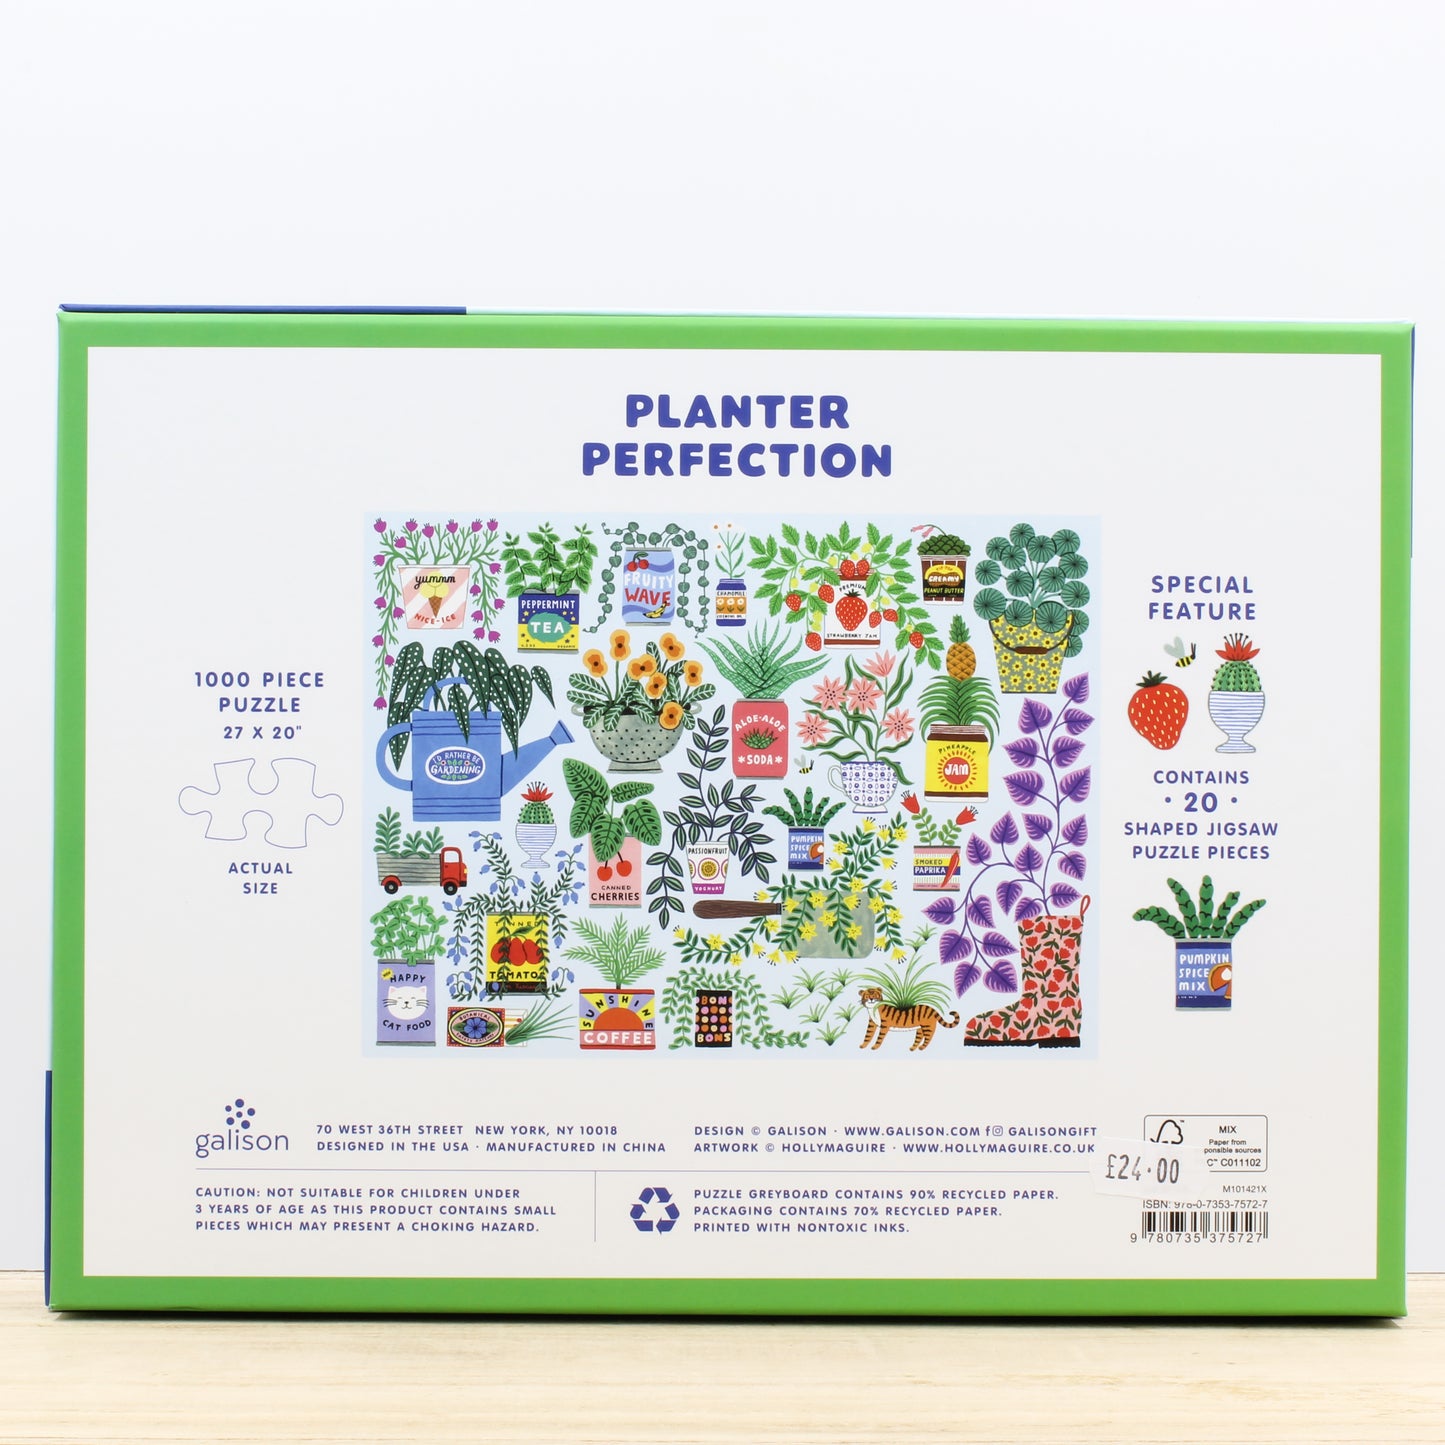 Planter Perfection: 1000 Piece Jigsaw Puzzle